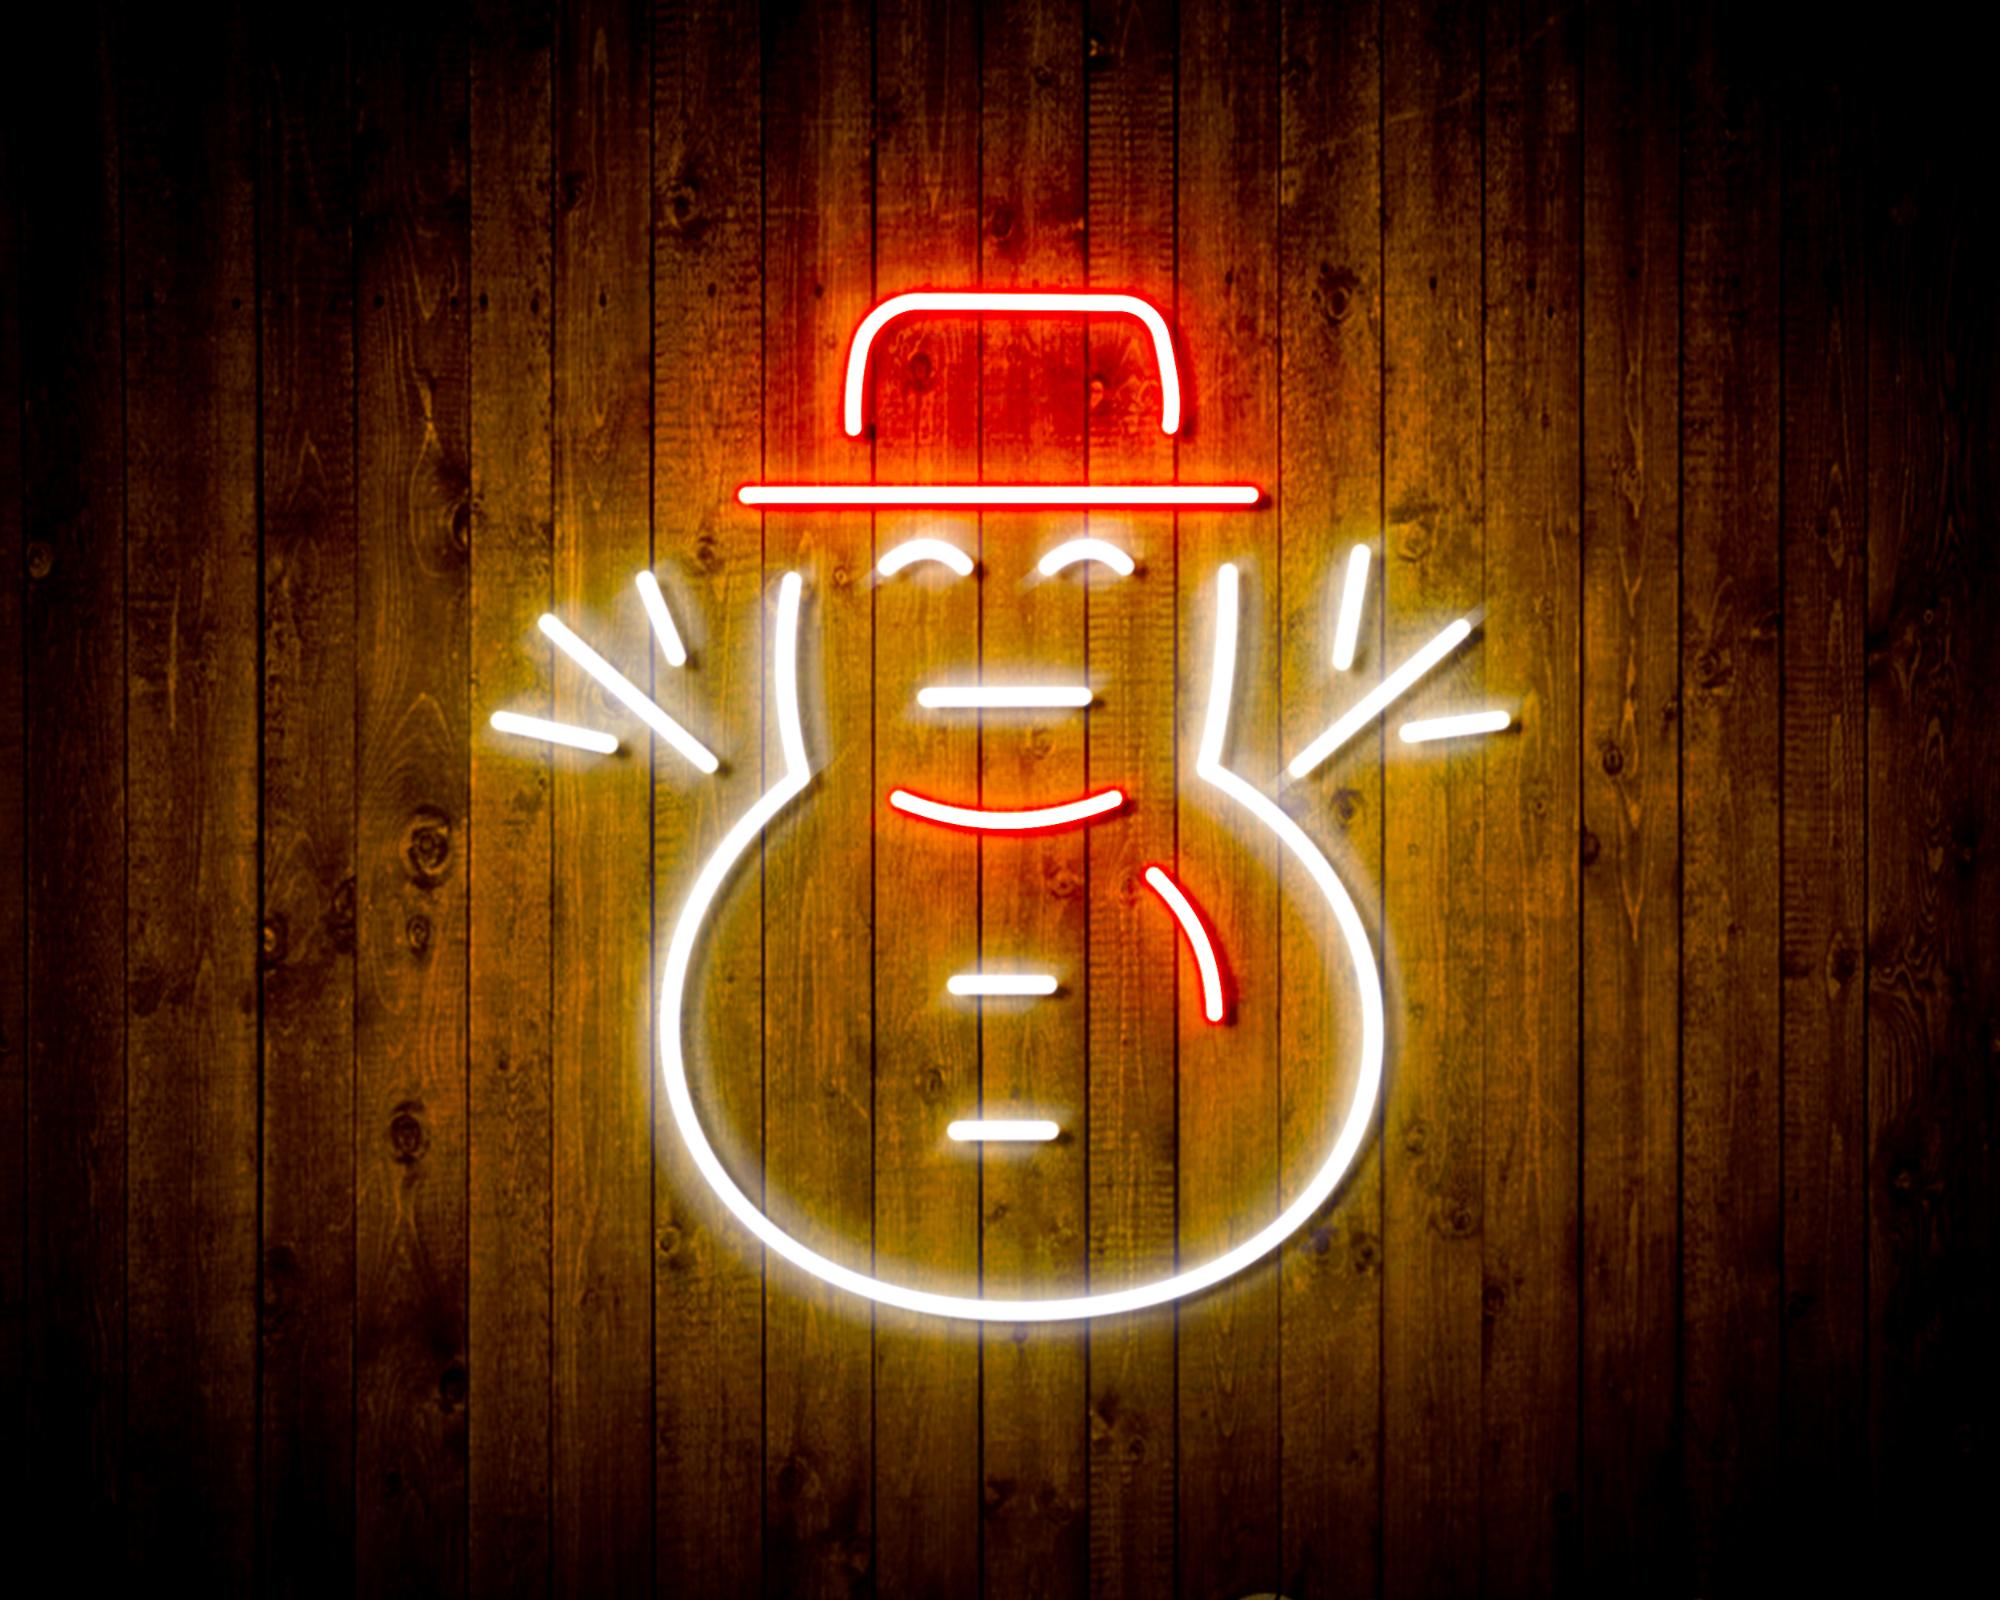 Snowman LED Neon Sign Wall Light